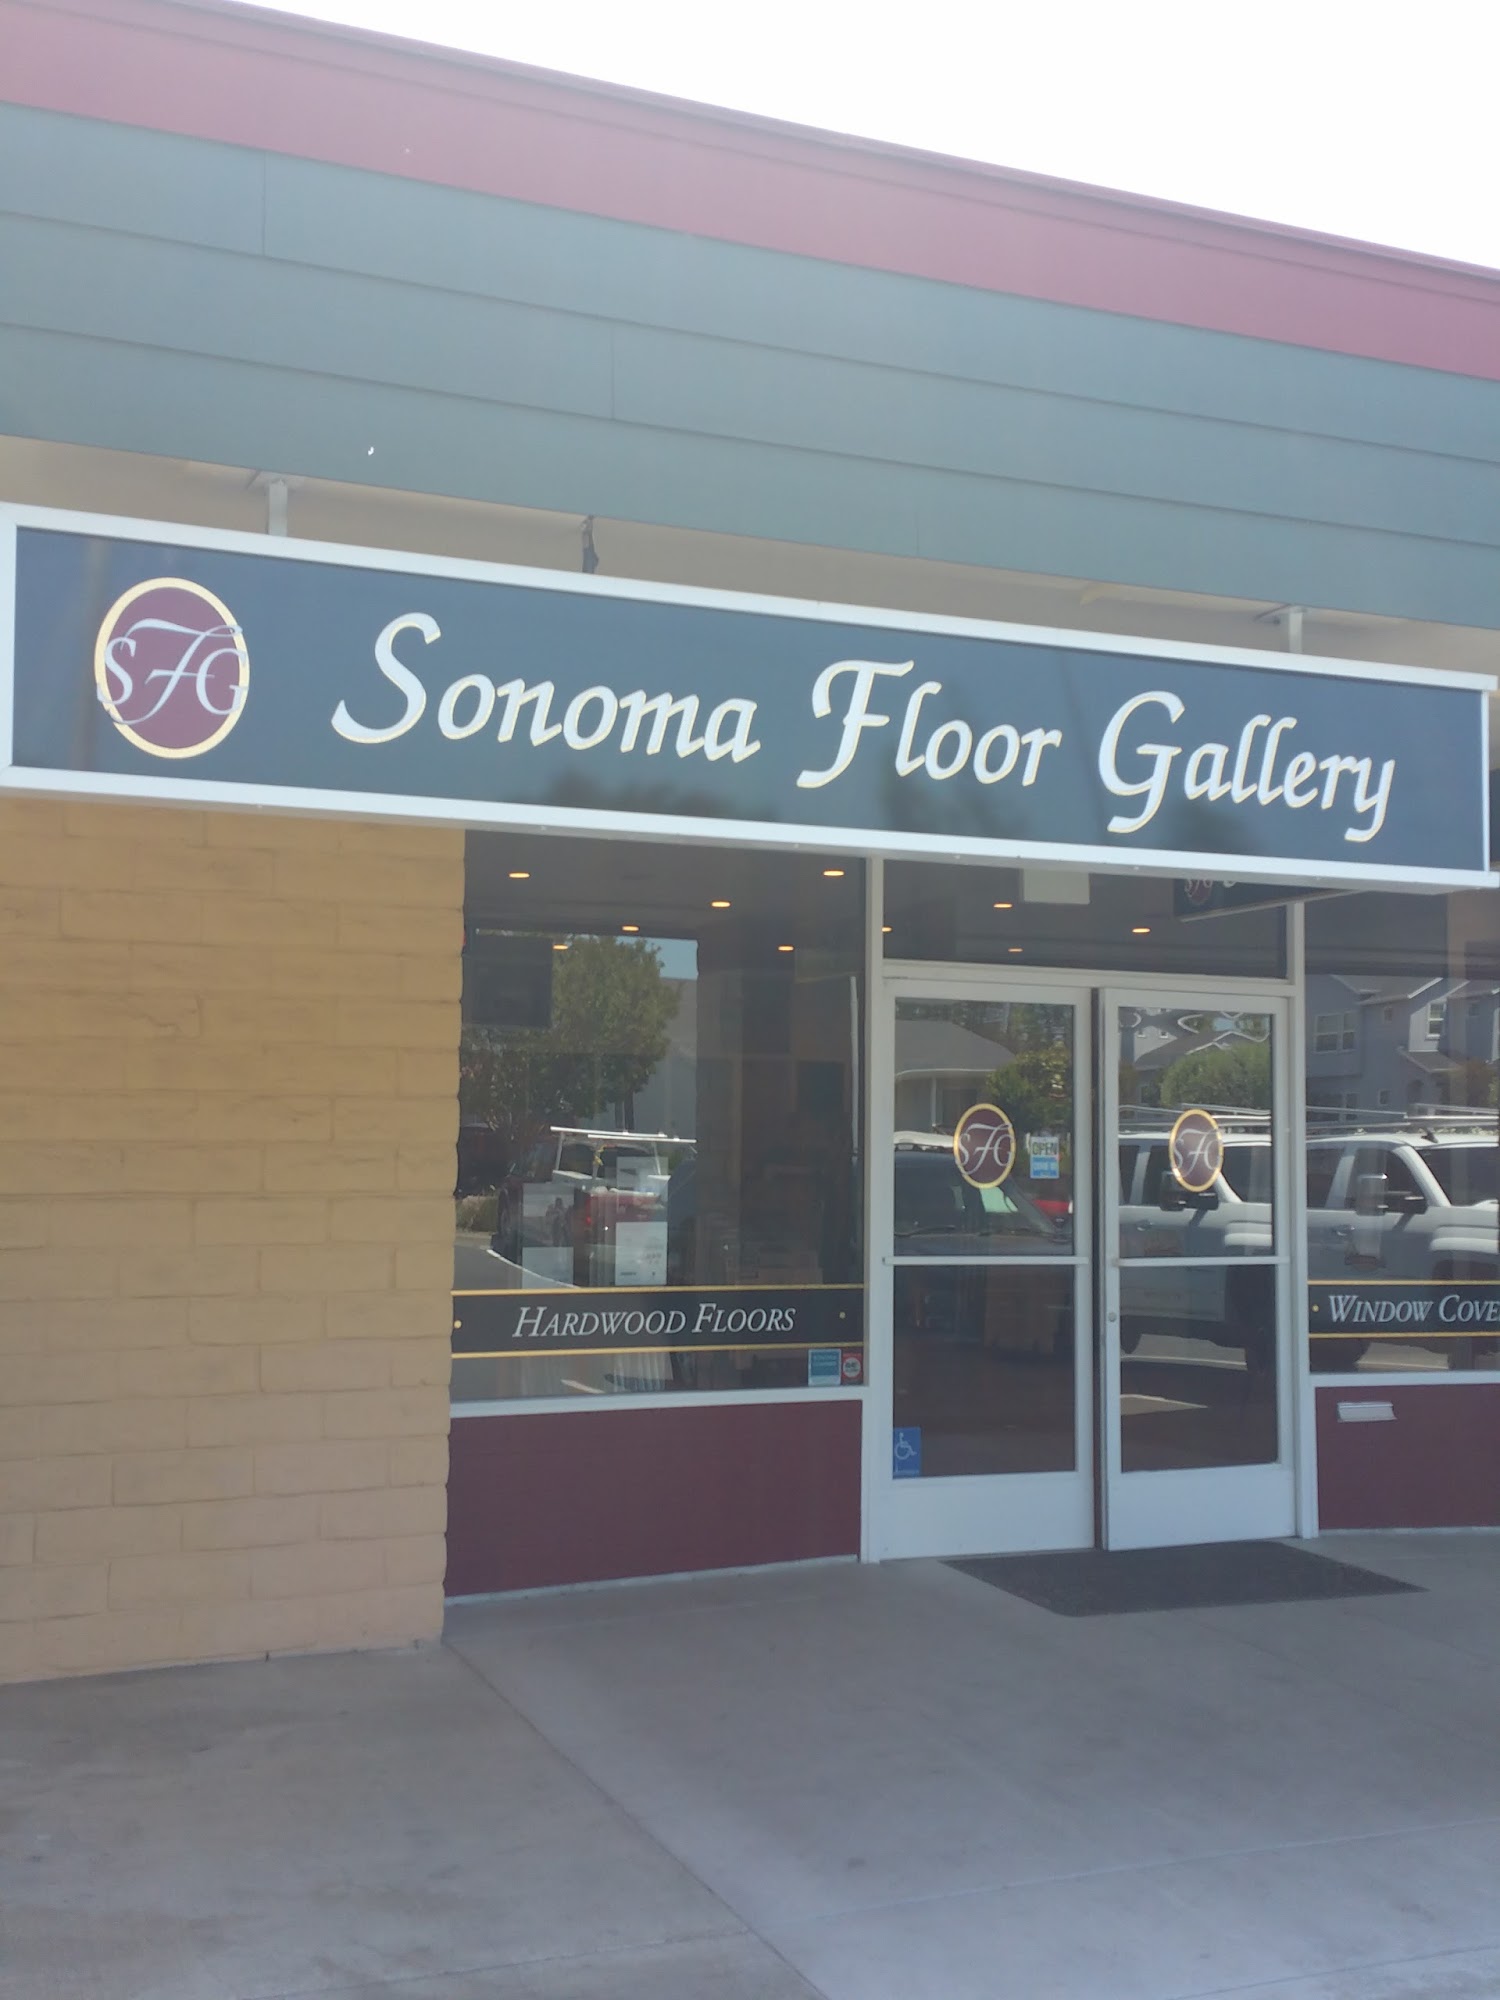 Sonoma Floor Gallery